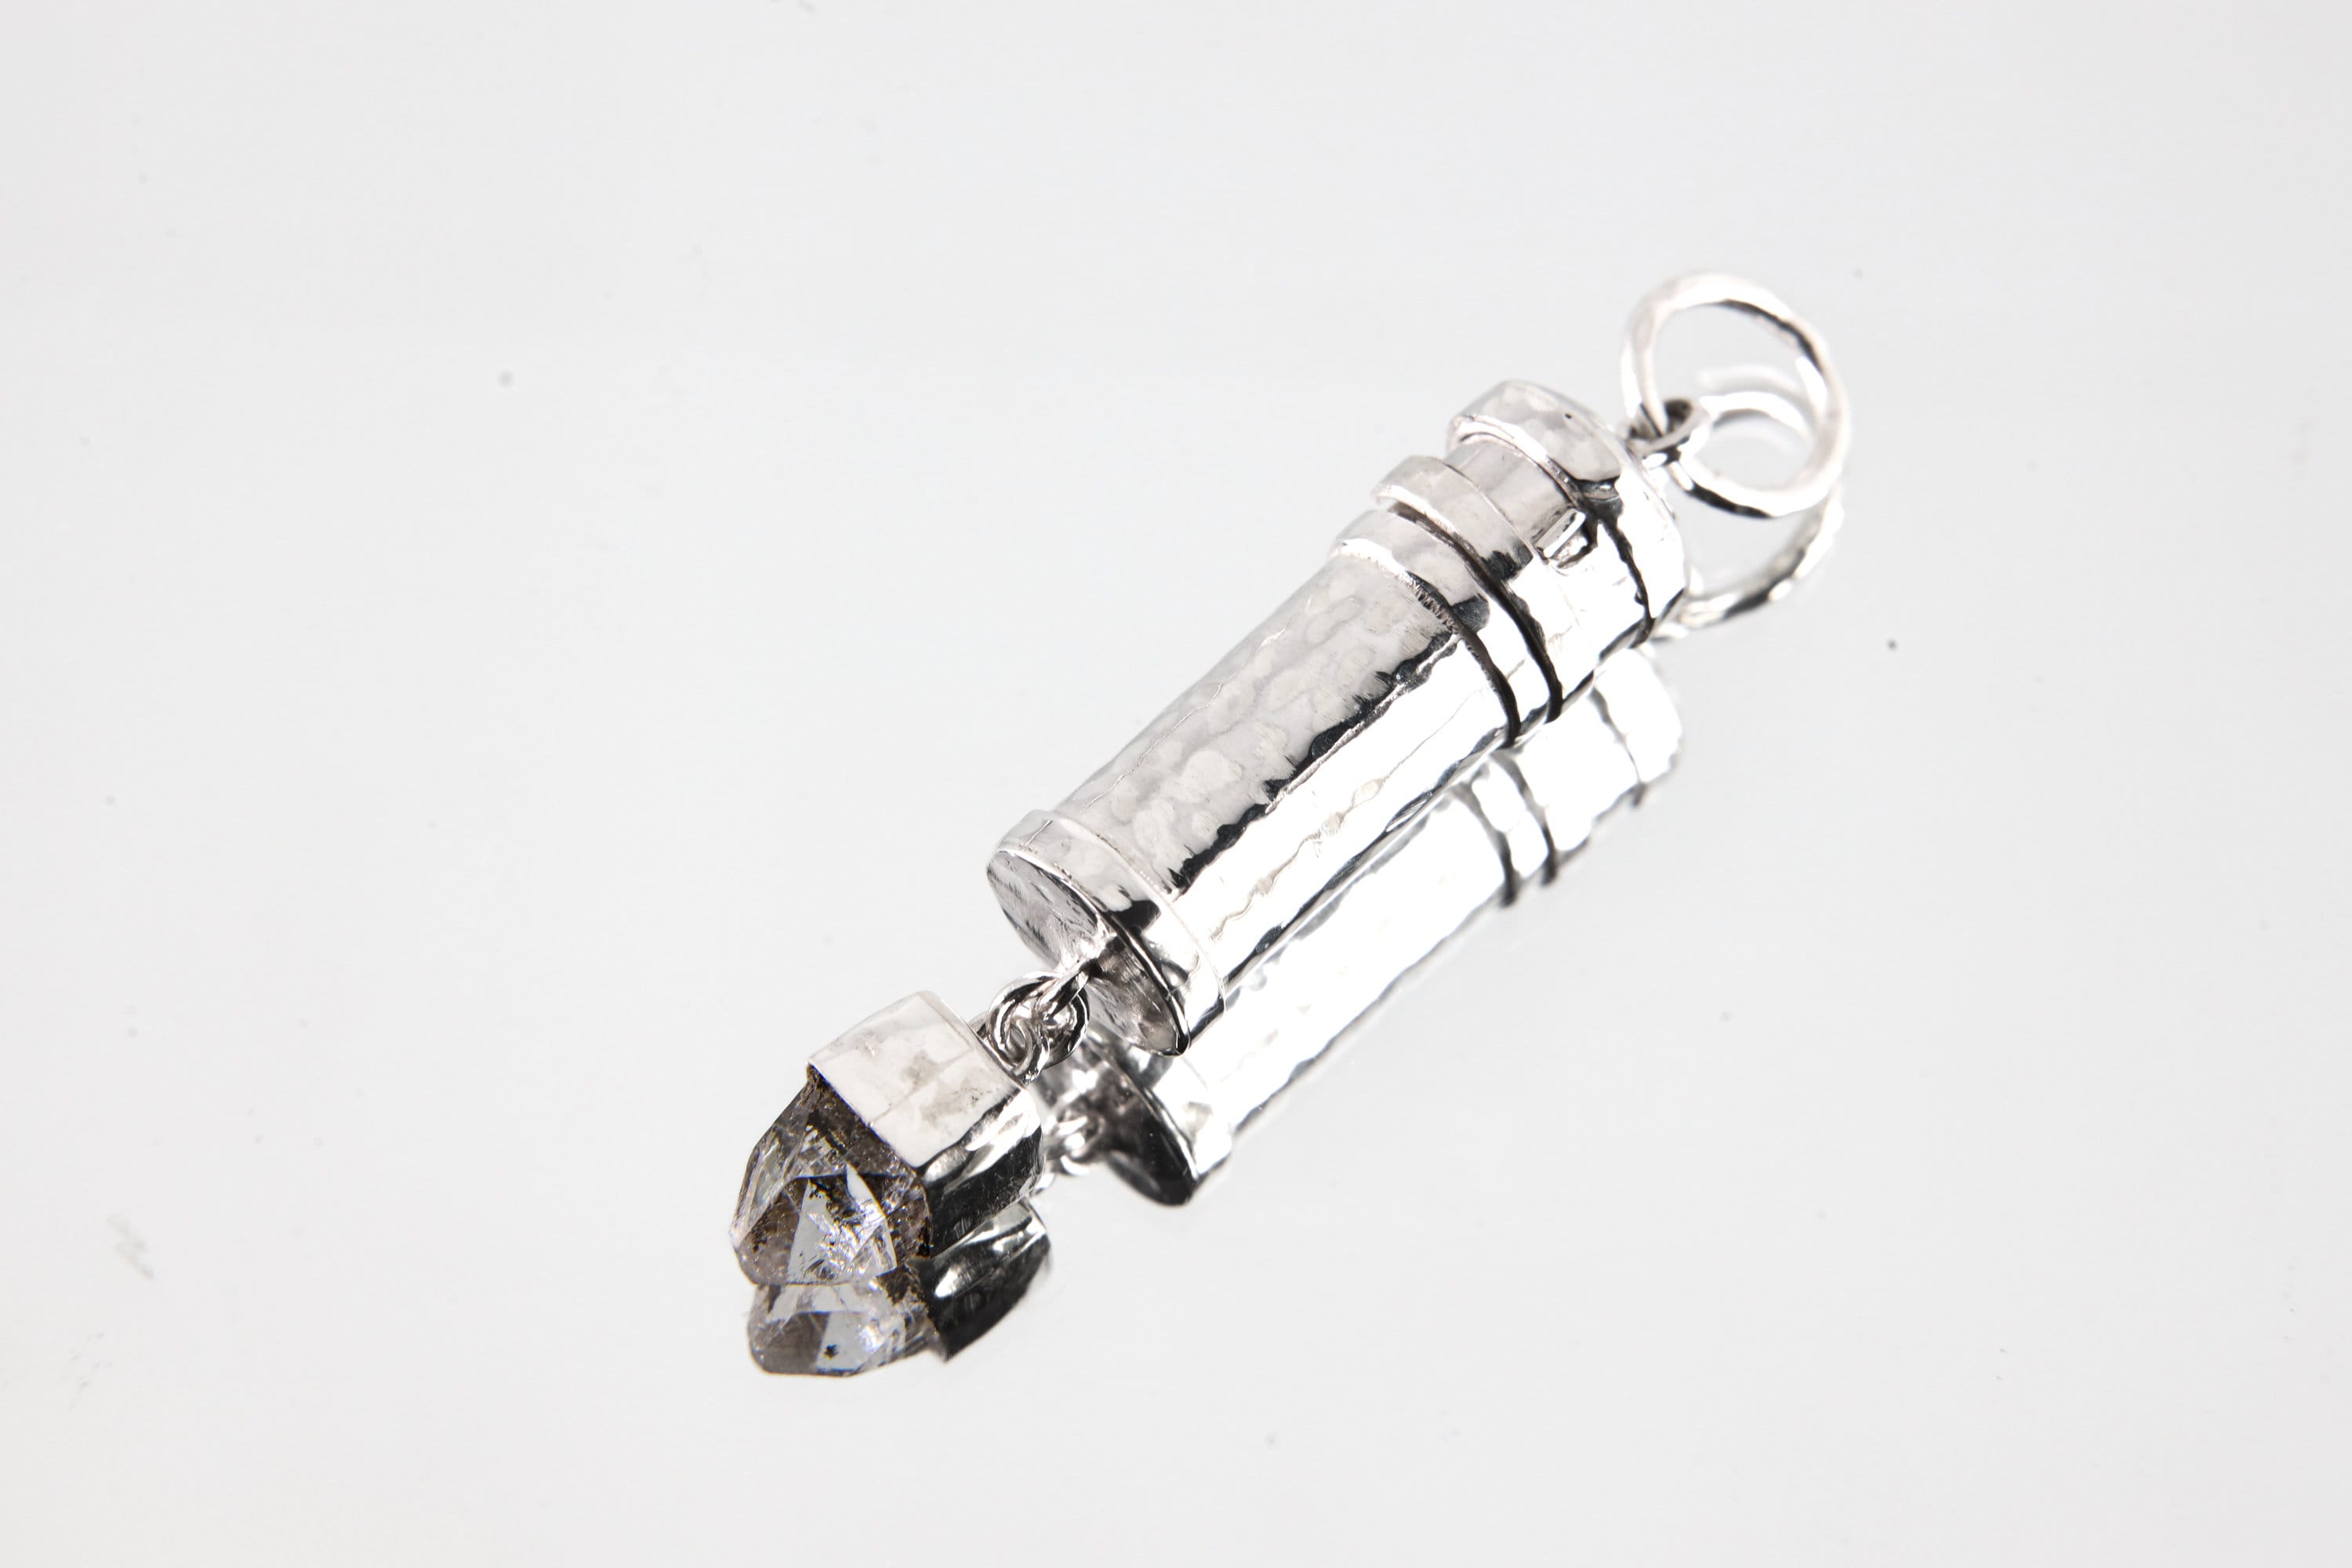 Dangeling Herkimer Diamond - Sizable Solid Capsule Locket - Stash Urn - Textured & Sterling Silver Pendant